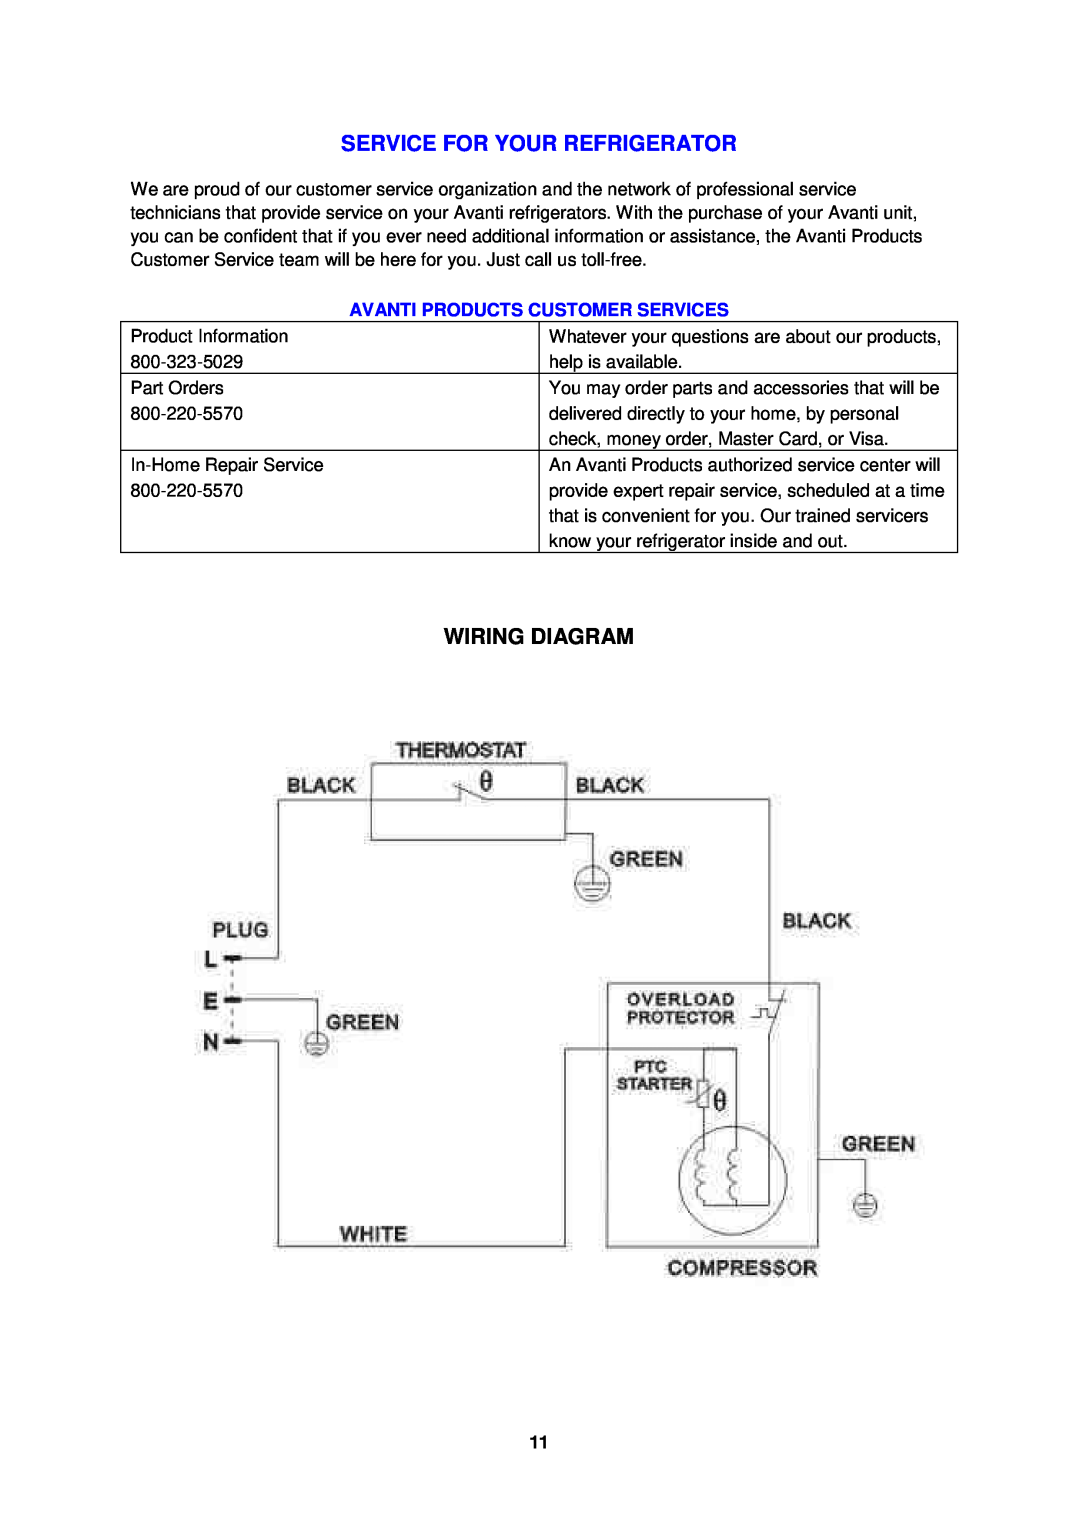 Avanti BCA193BG-1 instruction manual Service For Your Refrigerator, Wiring Diagram, Avanti Products Customer Services 